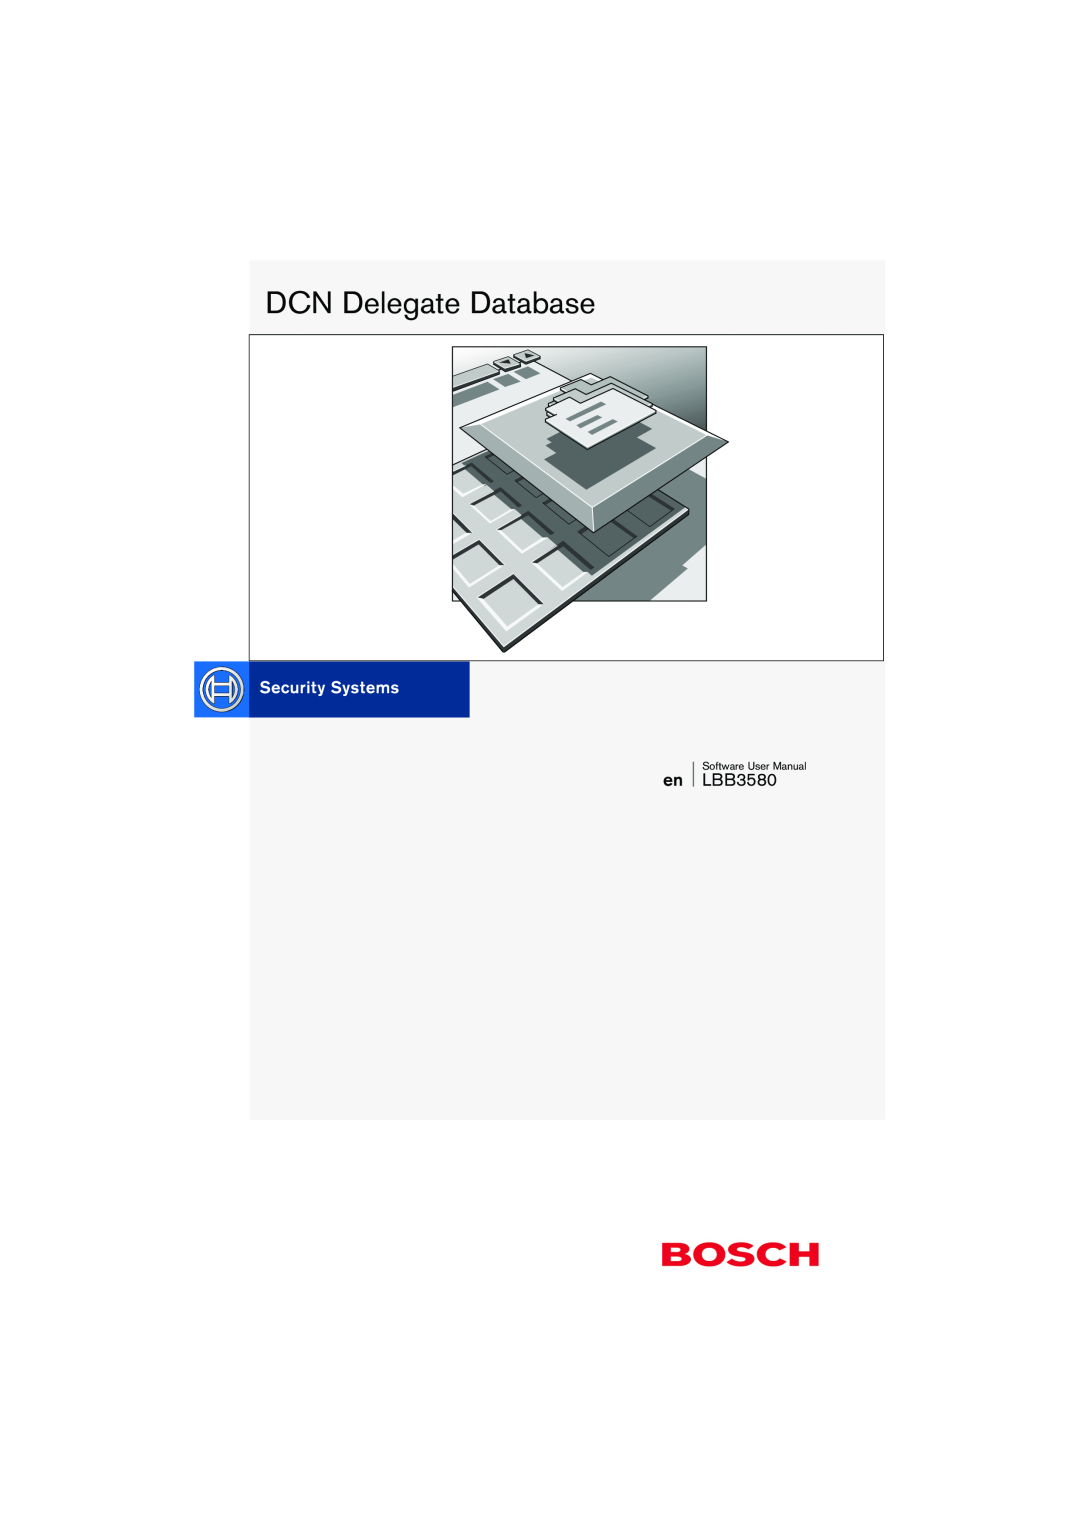 Bosch Appliances LBB3580 user manual DCN Delegate Database 